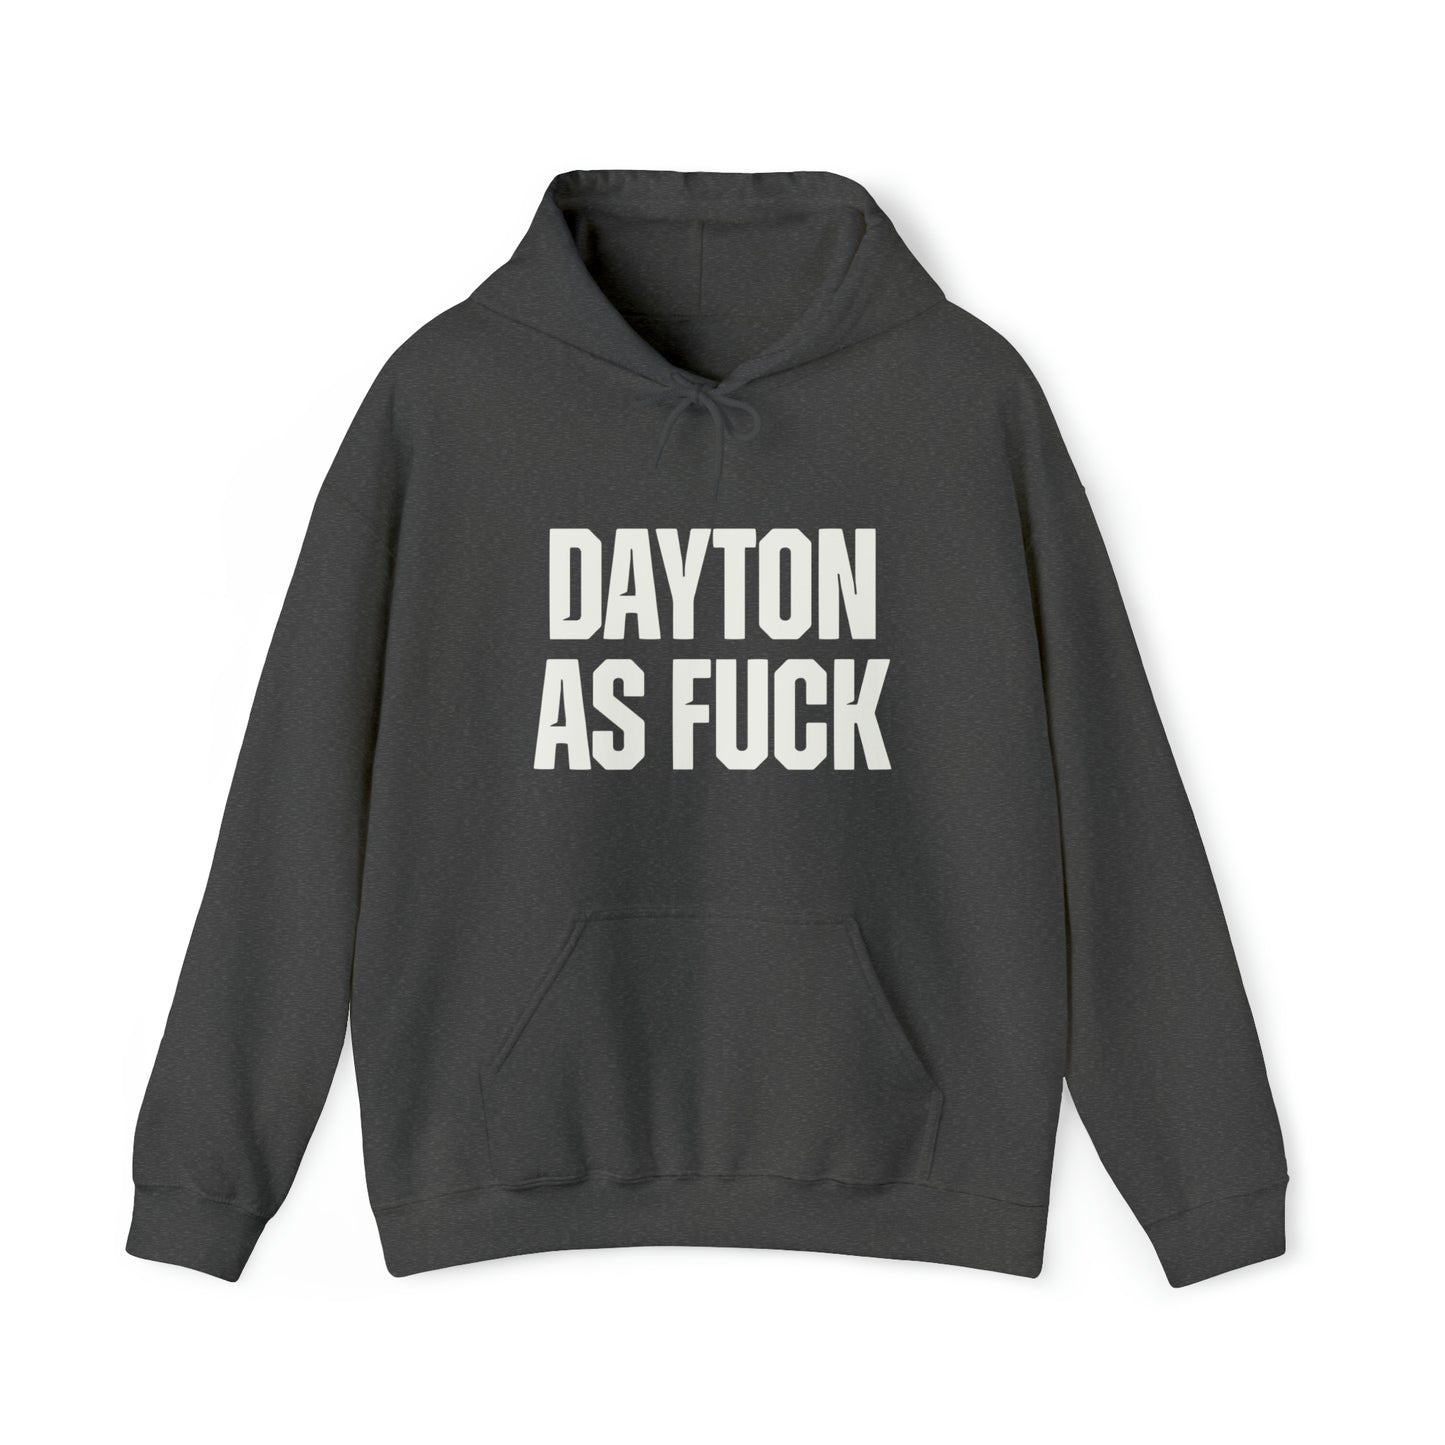 Dayton As Fuck Hoodie Sweatshirt